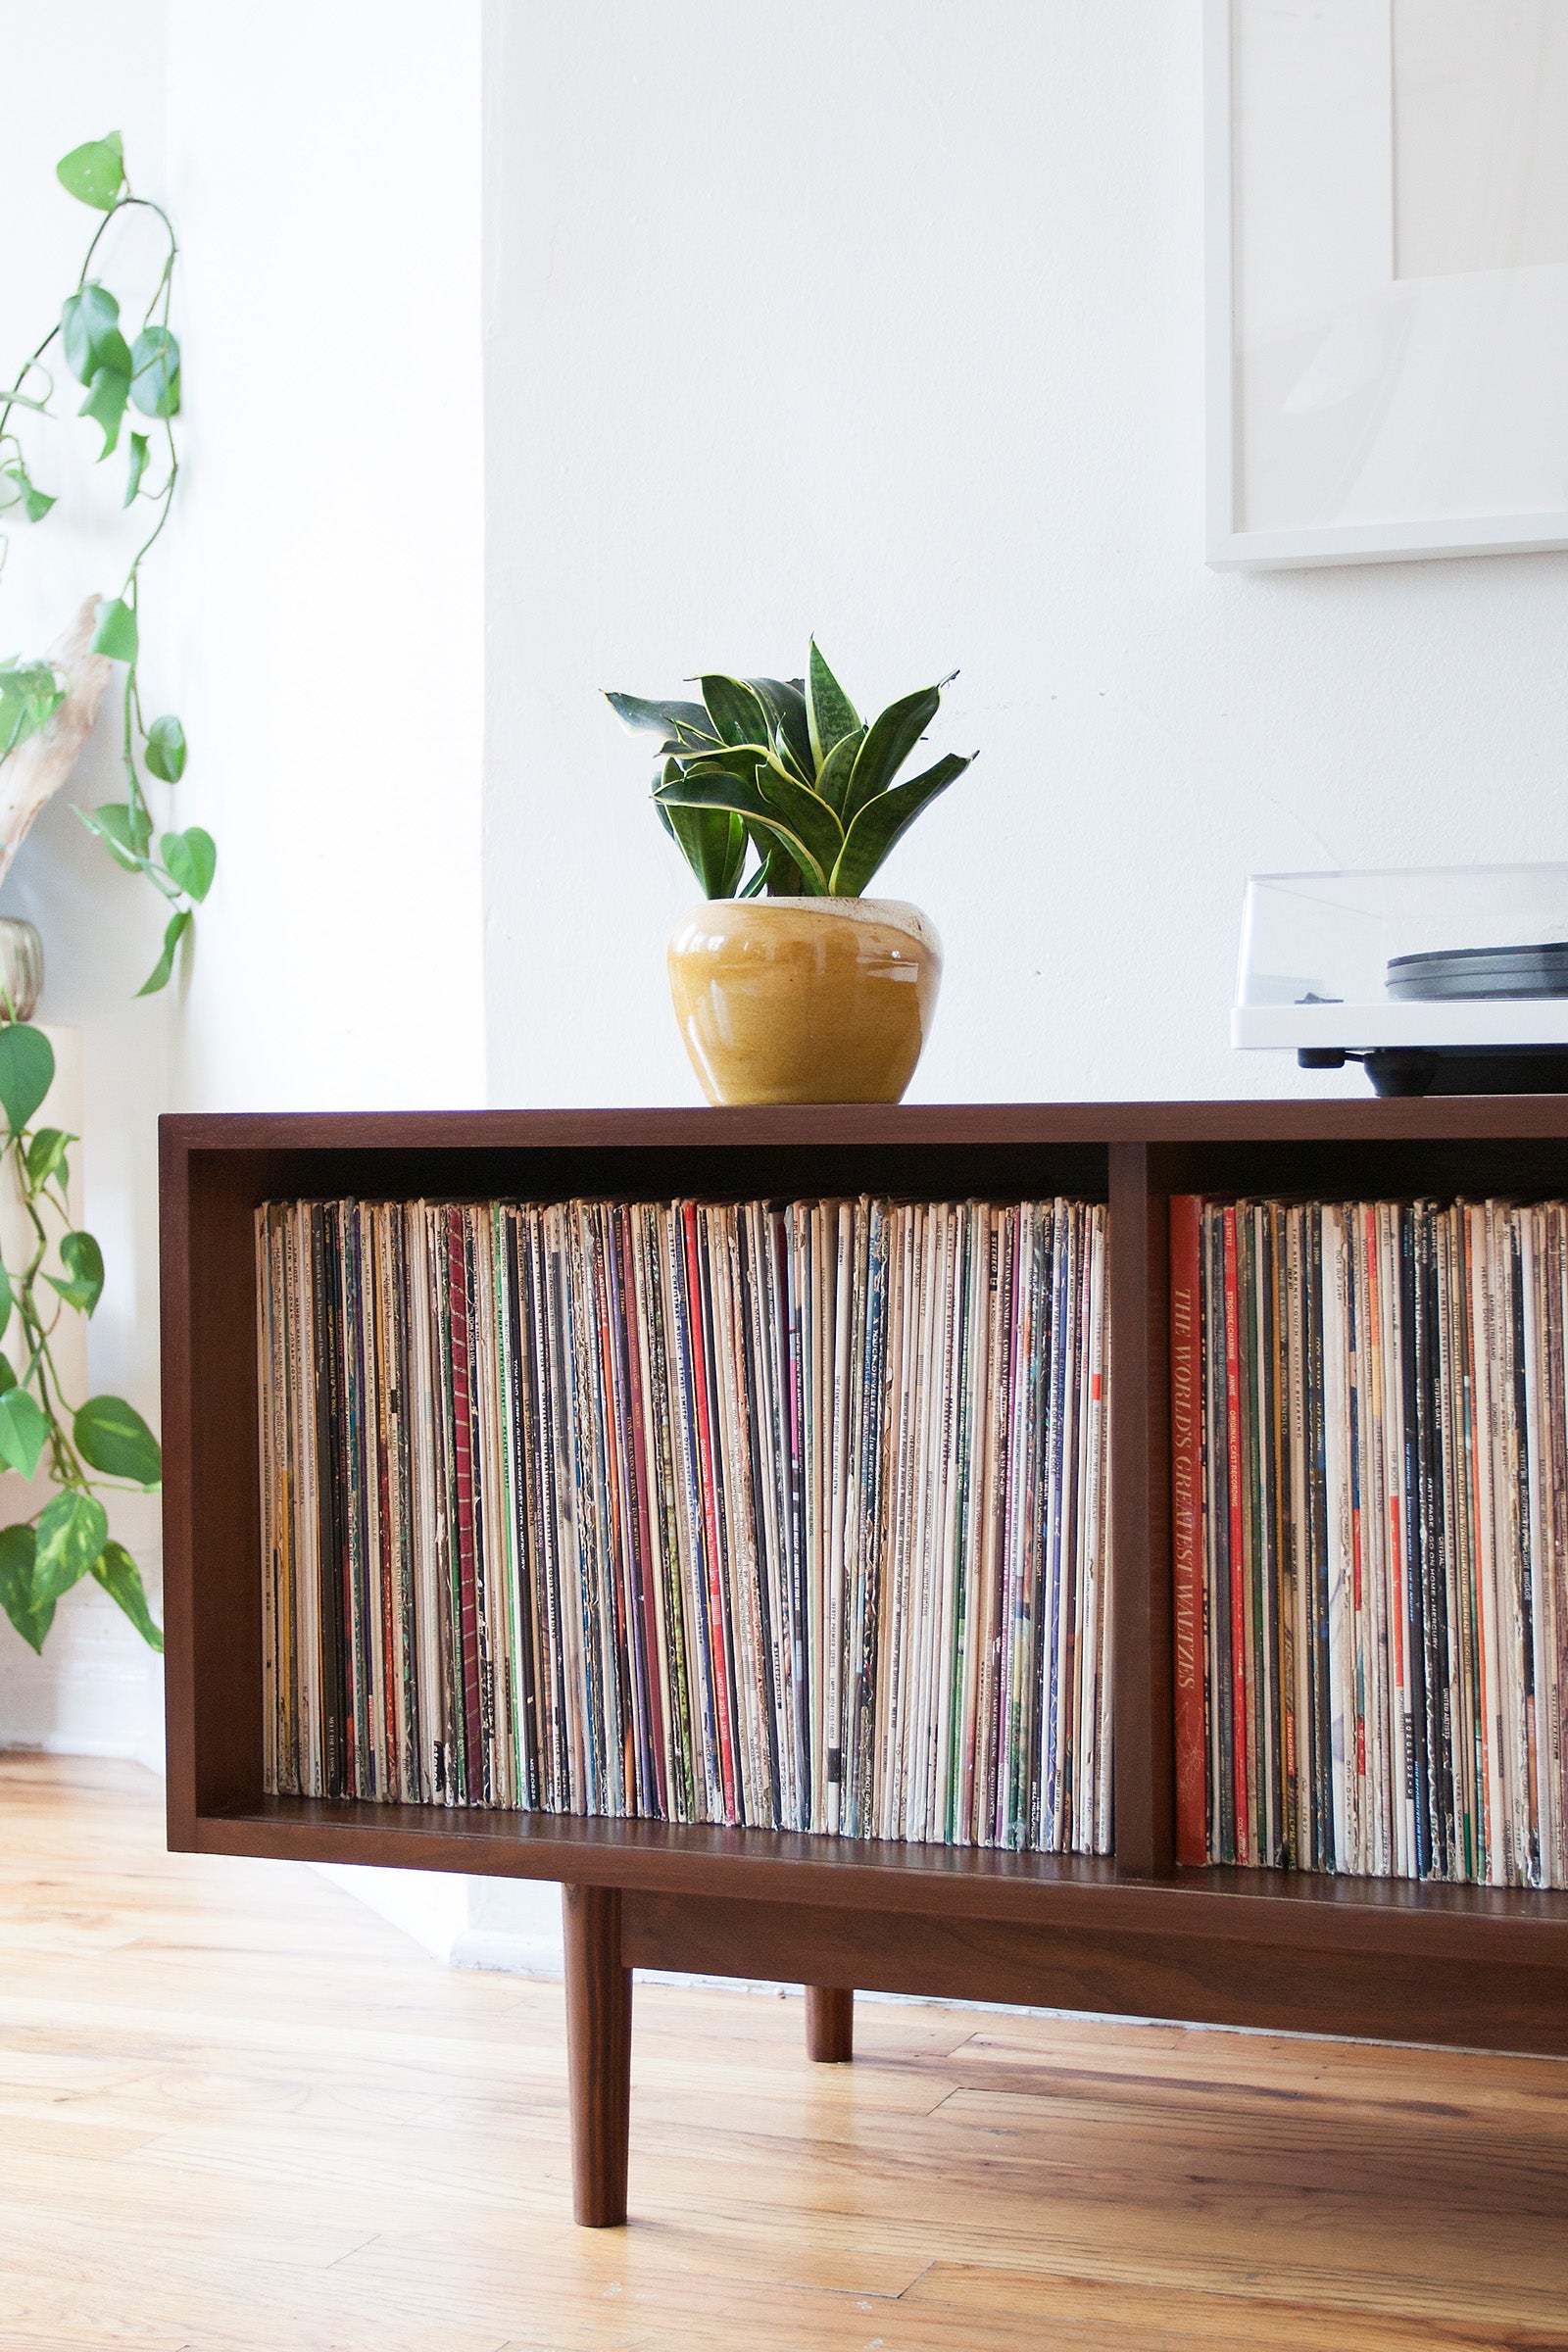 1 x 3 Vinyl Record Storage Cabinet - Customizable Length & Shelf